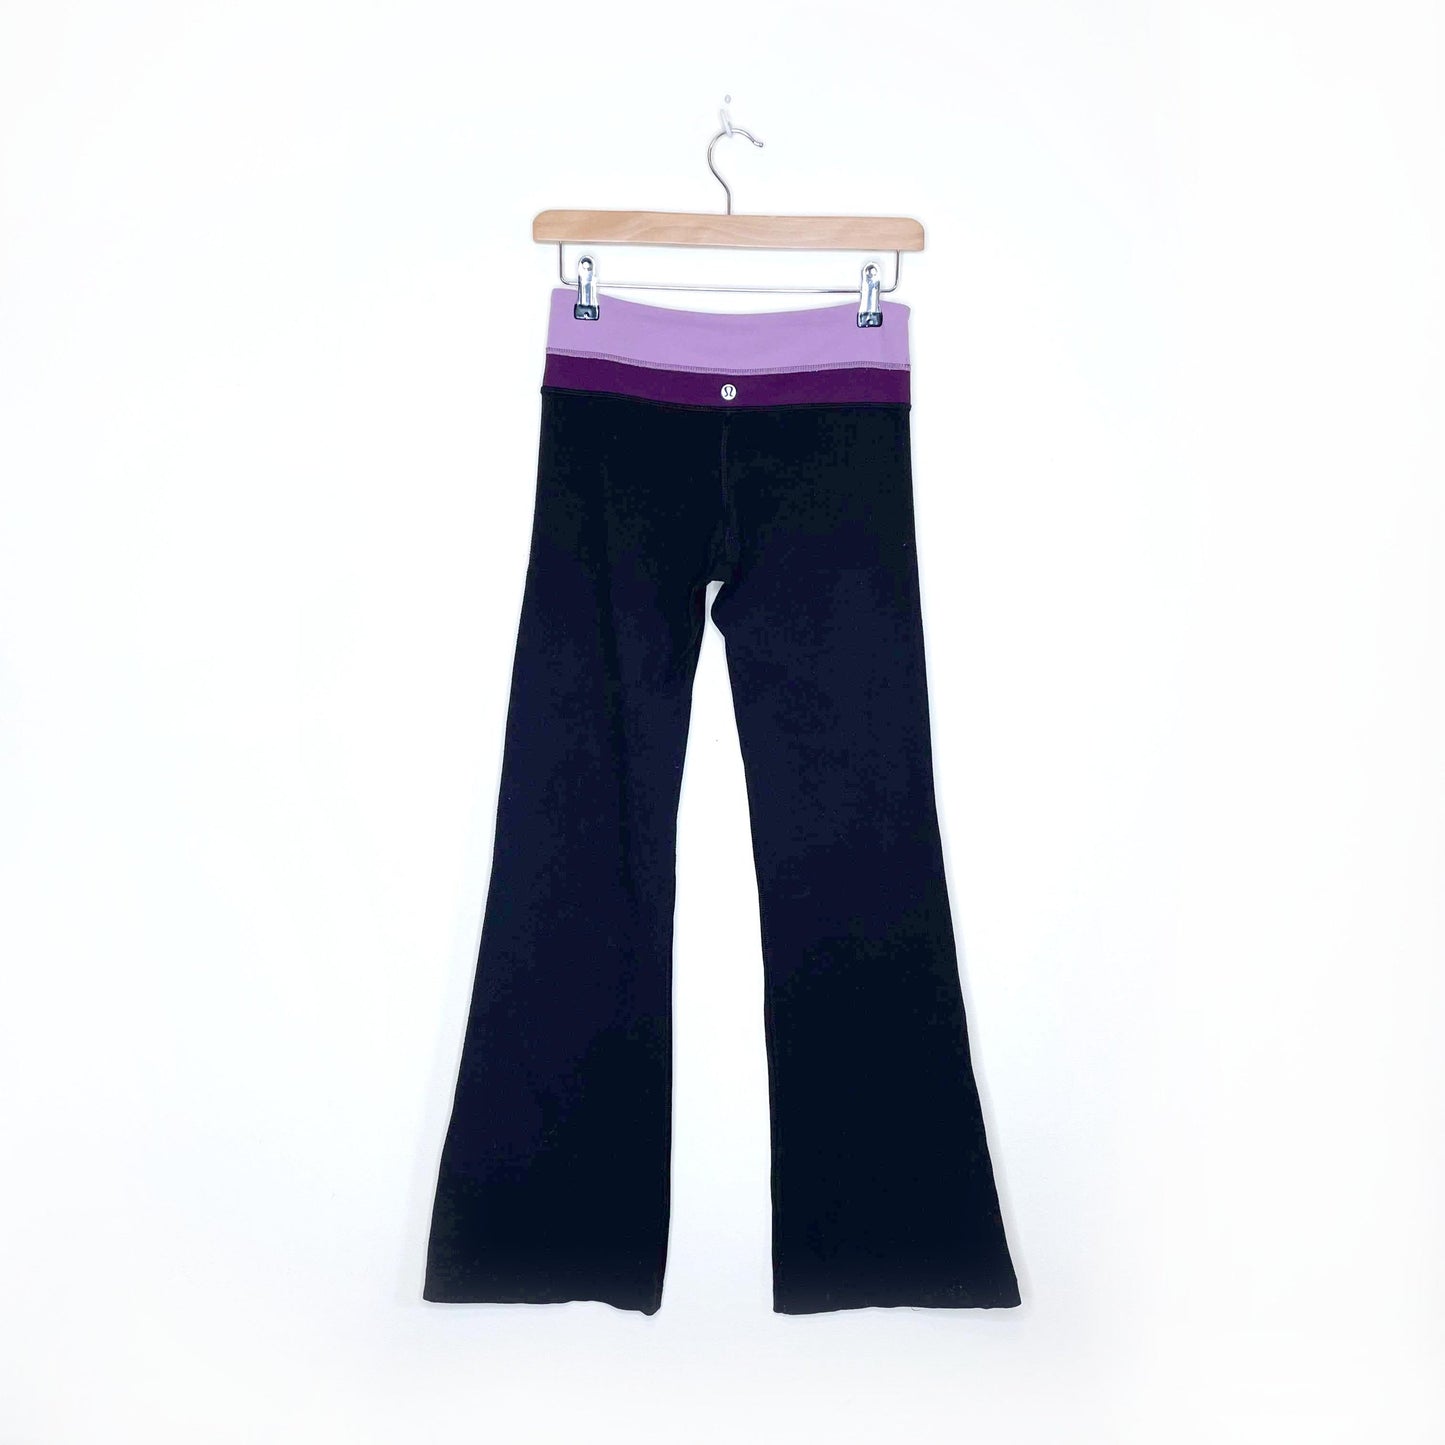 lululemon groove flare pants with purple waistband - size 4